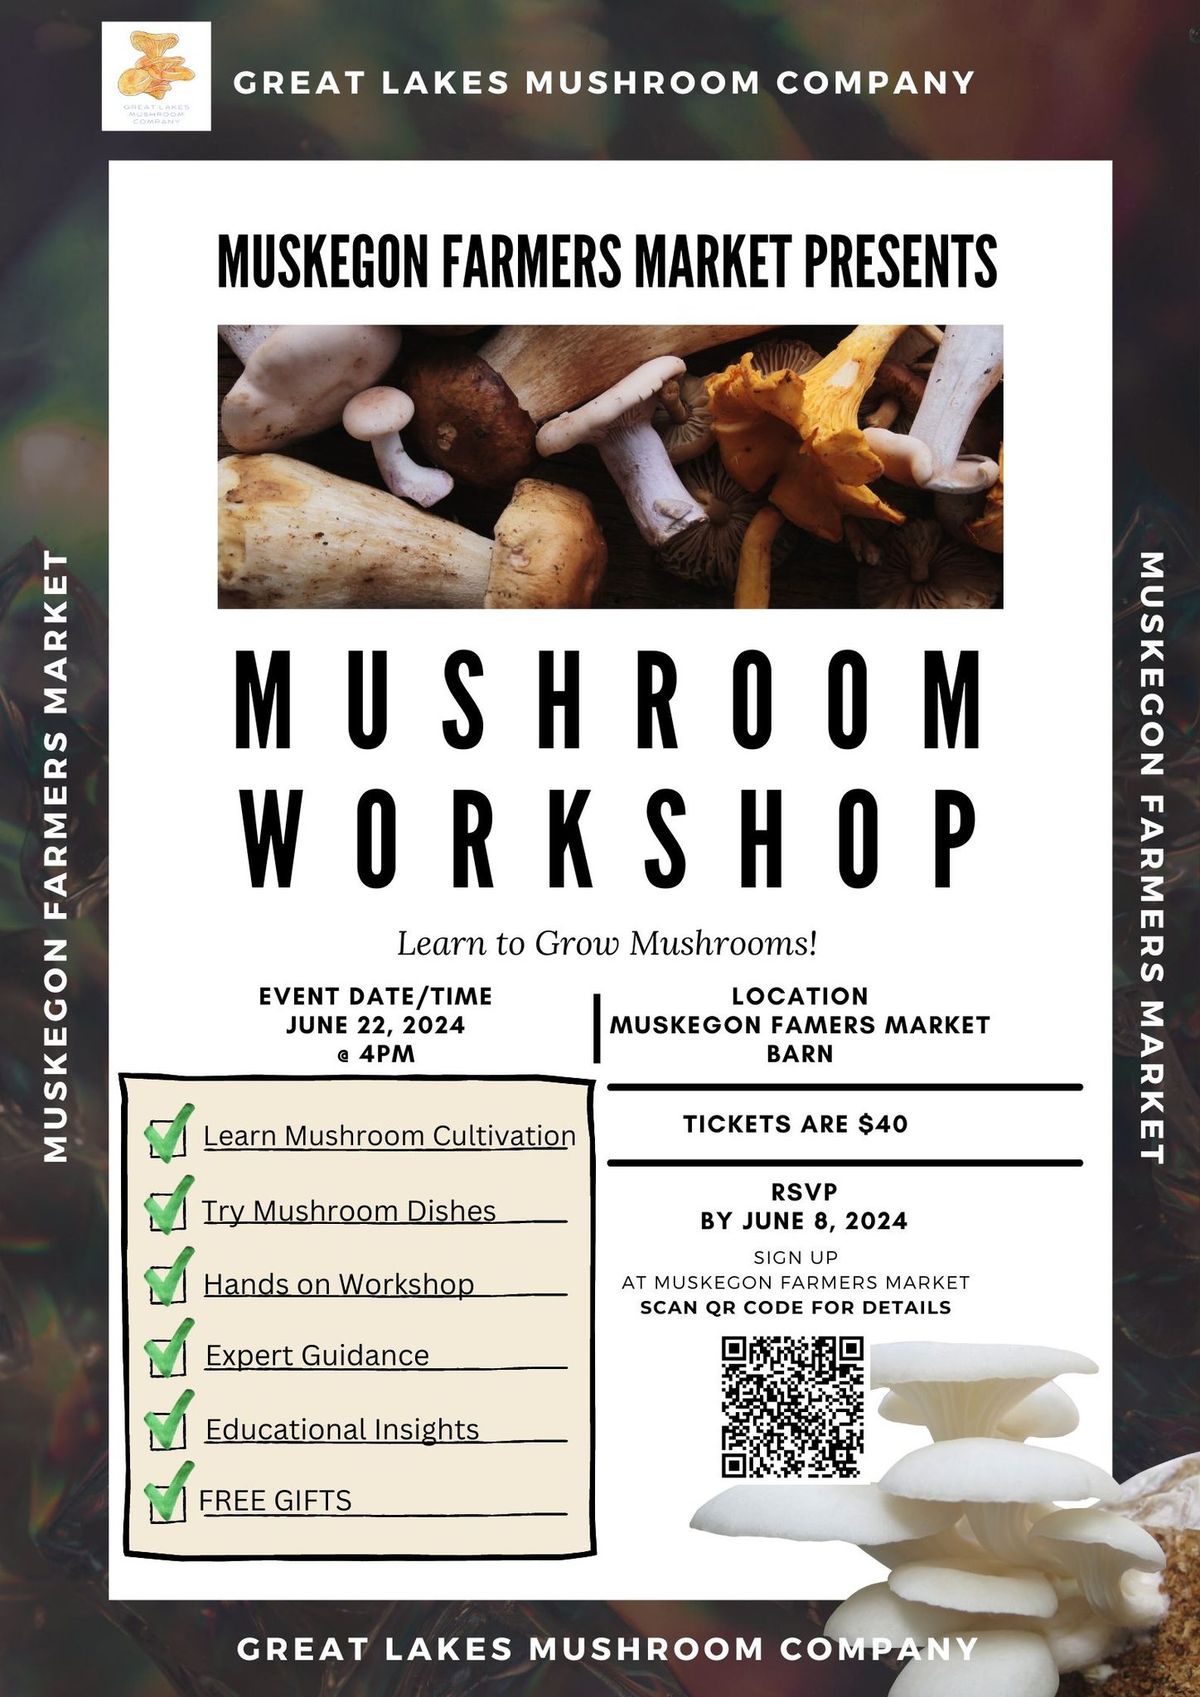 Muskegon Farmers Market Mushroom Workshop